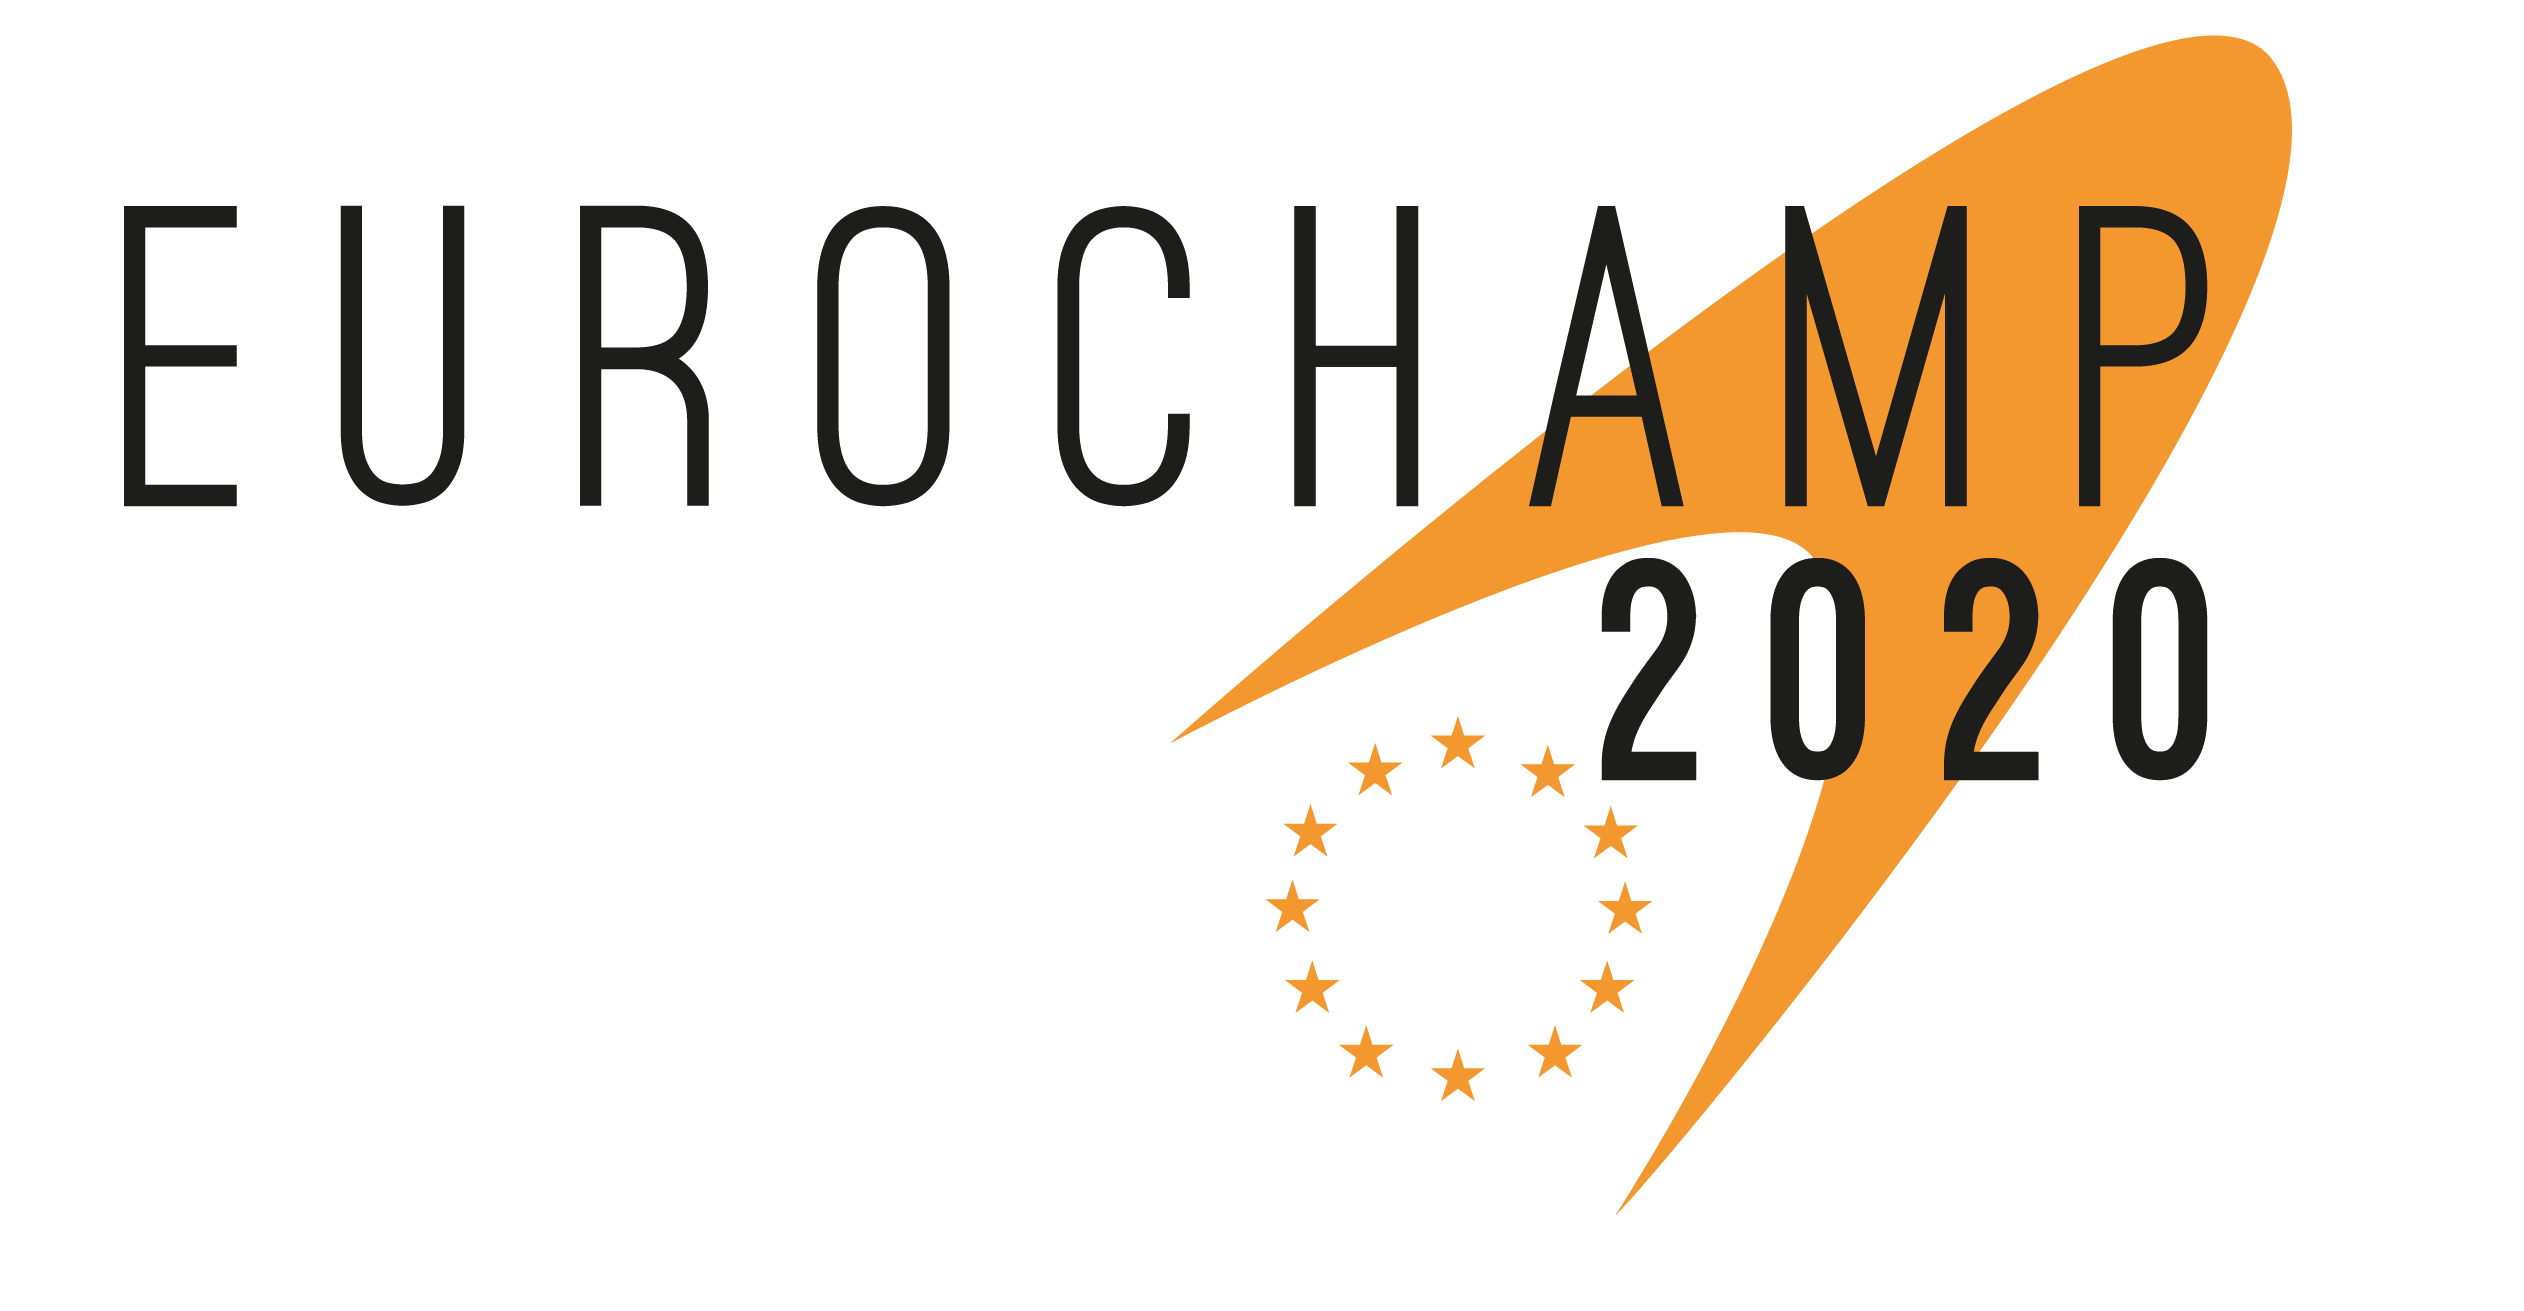 EUROCHAMP 2020